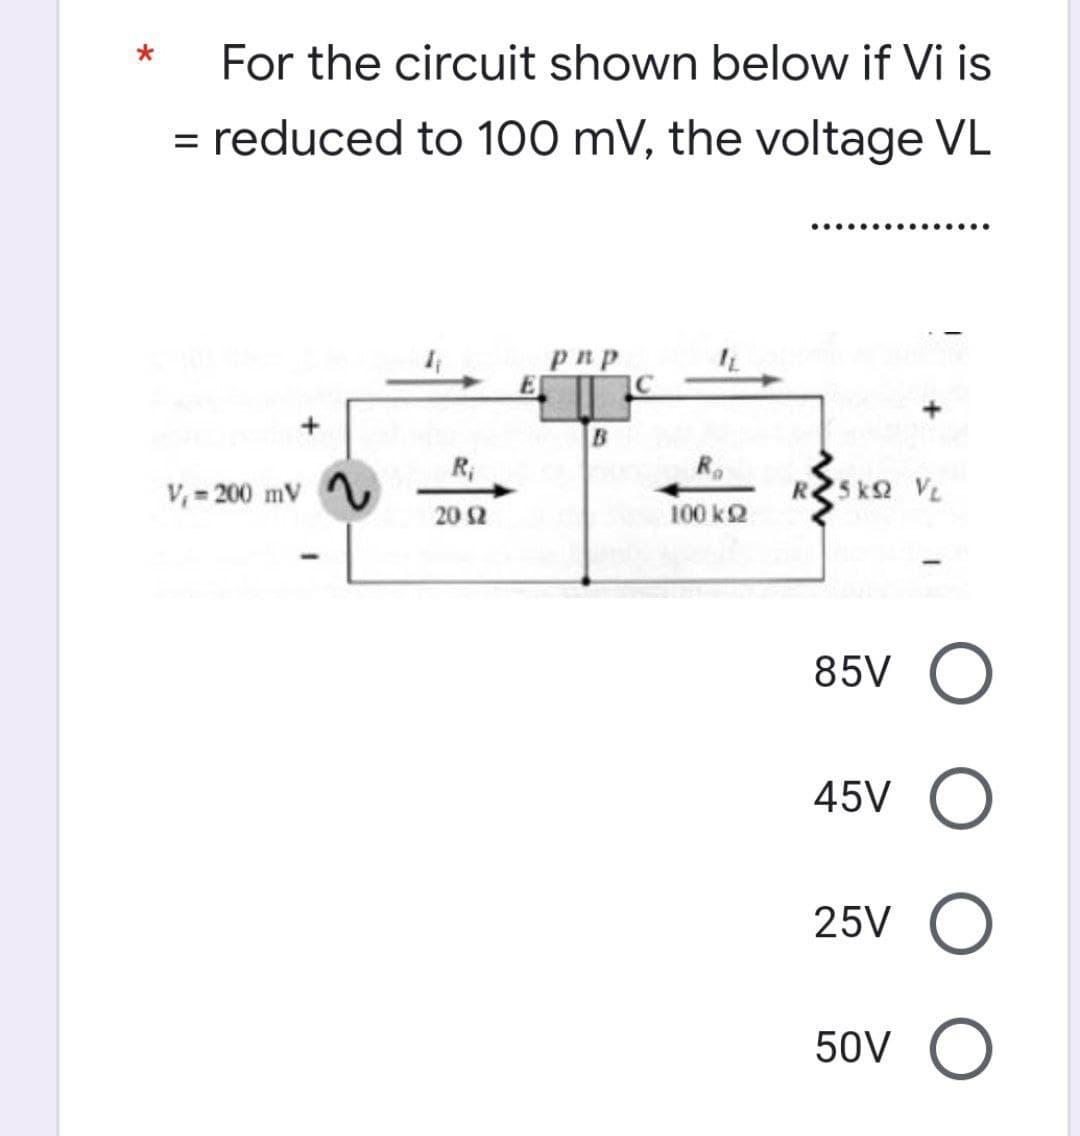 *
For the circuit shown below if Vi is
= reduced to 100 mV, the voltage VL
pnp
IL
B
V₁= 200 mV ~
R25 KQ V₂
100 ΚΩ
-
R₁
20 (2
85V O
45V O
25V O
50V